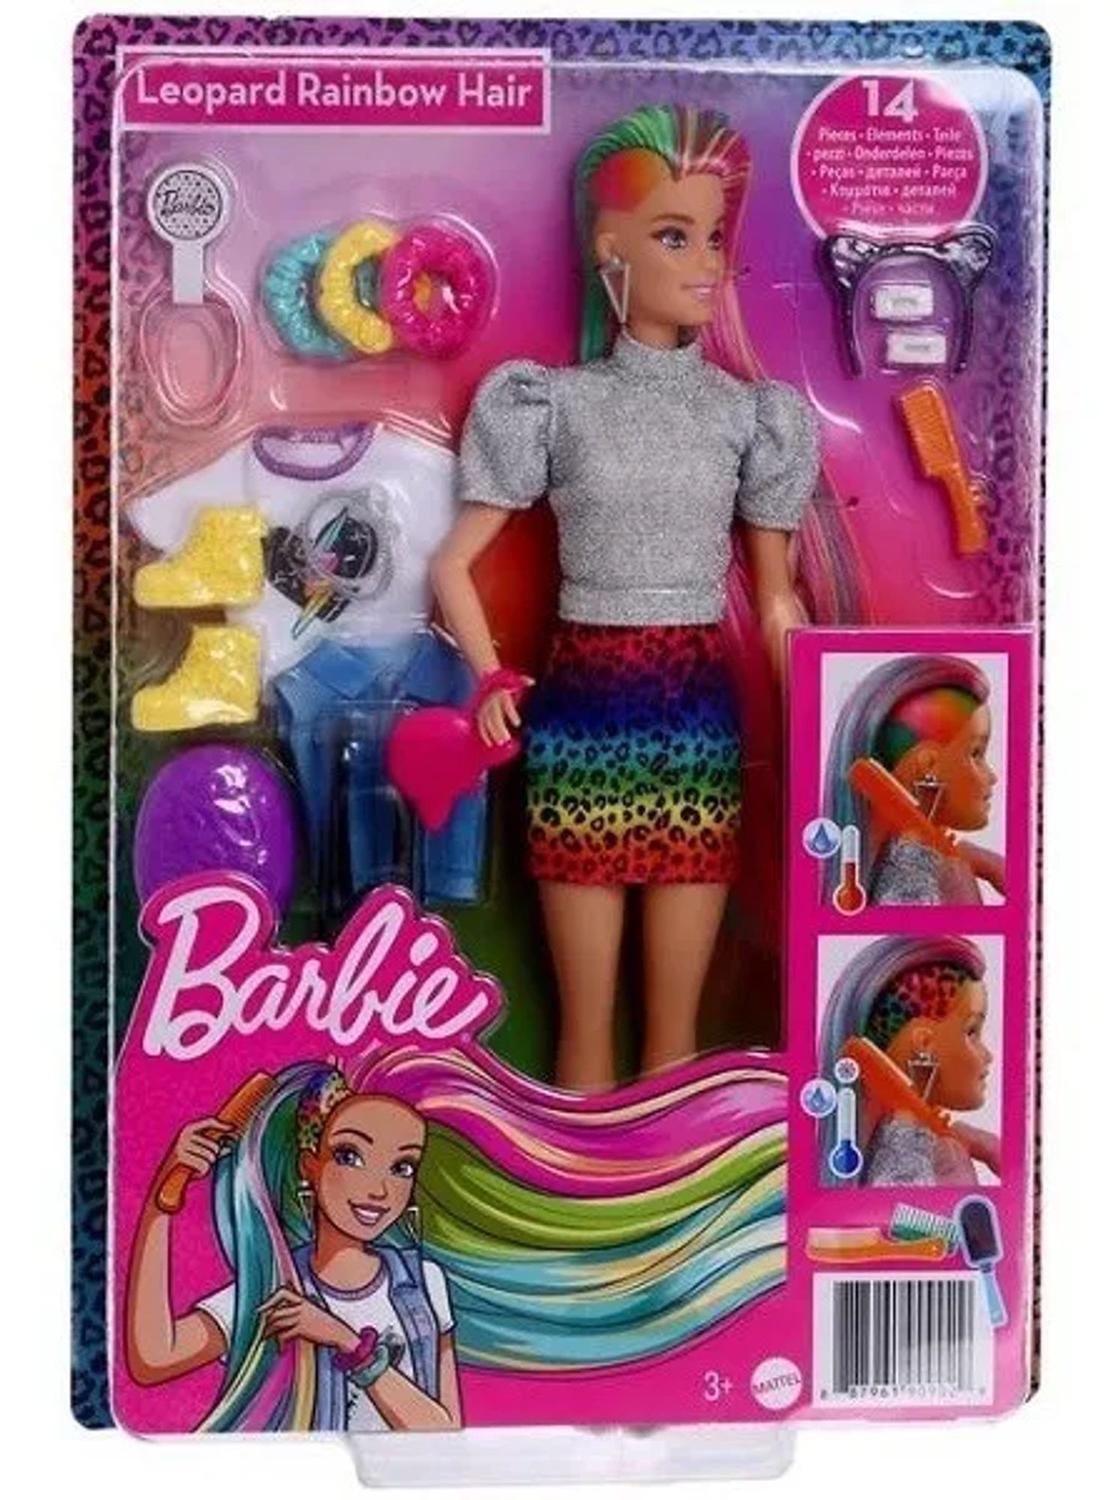 Brinquedo Playset Boneca Barbie Cabelos Arco-Íris Leopardo Leopard Rainbow Hair - Mattel